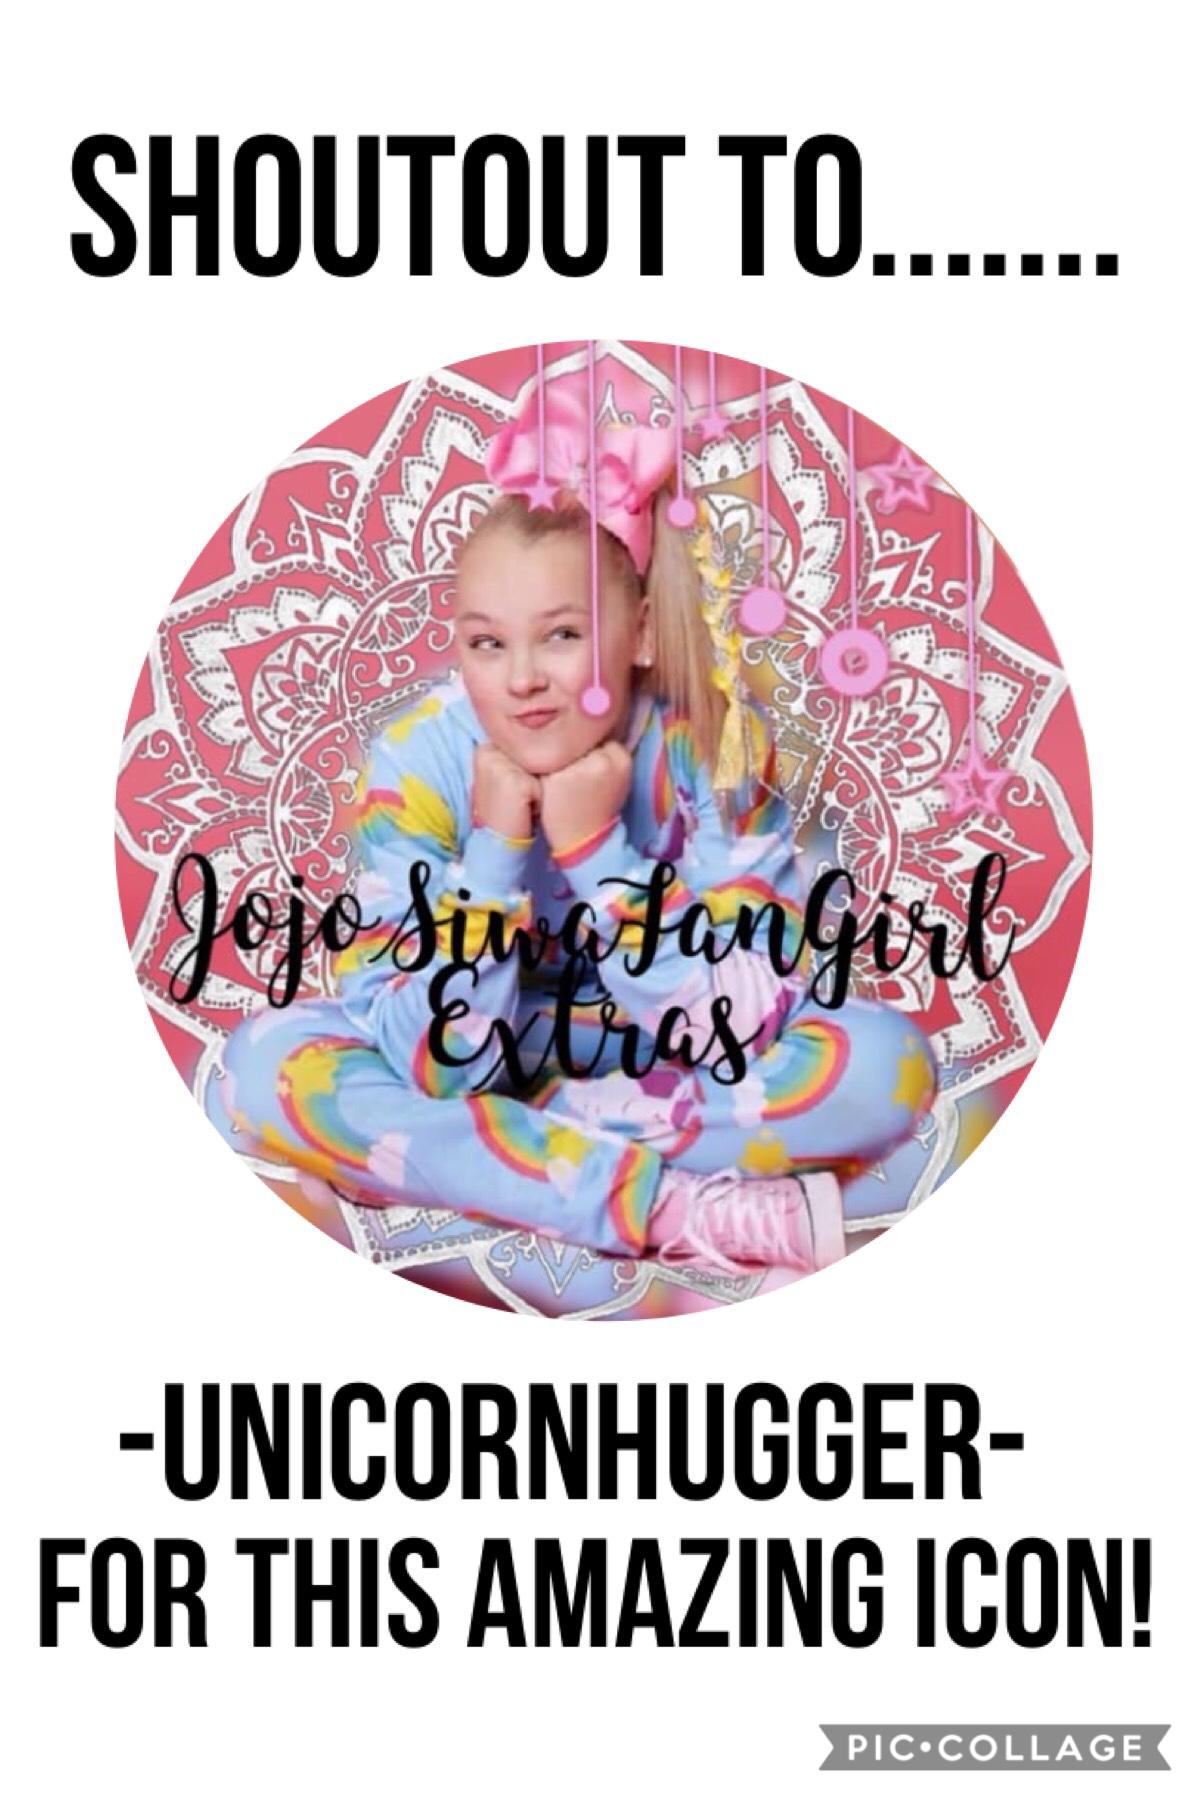 Tap❤️

Shoutout To the amazing-unicornhugger- for this amazing icon go follow her🧡
QOTD: 🍕or 🍟
AOTD: 🍕